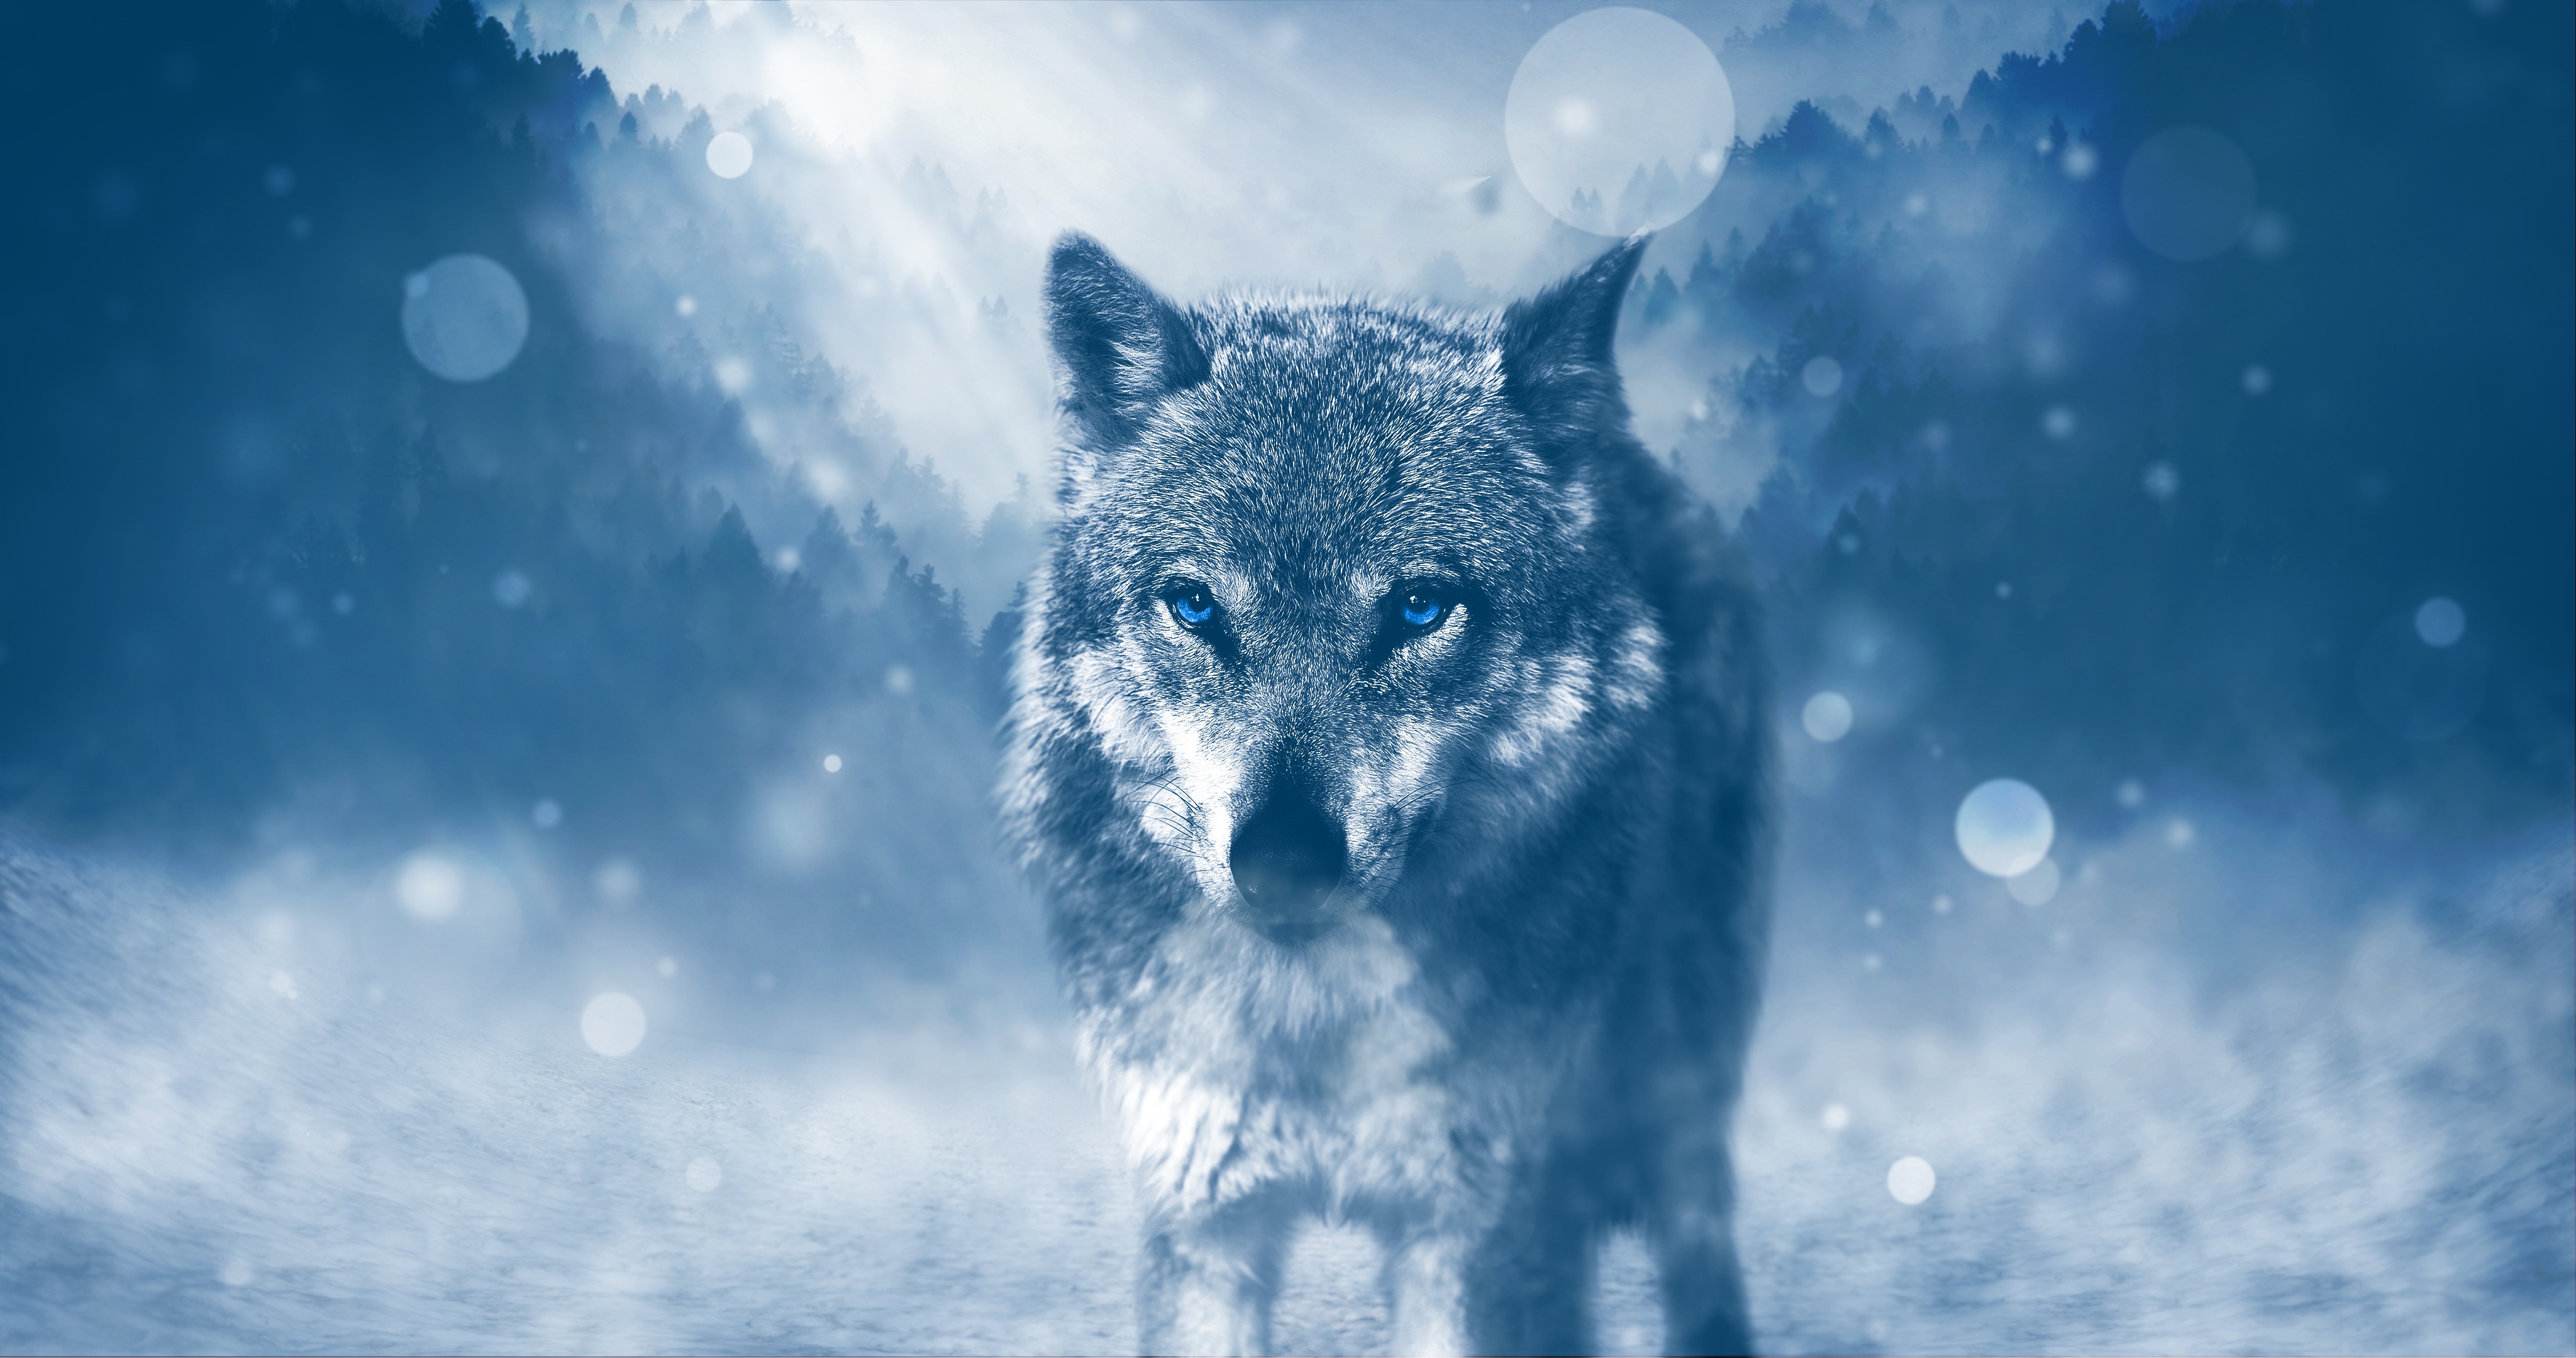 Blue eyed wolf by Jonny Lindner